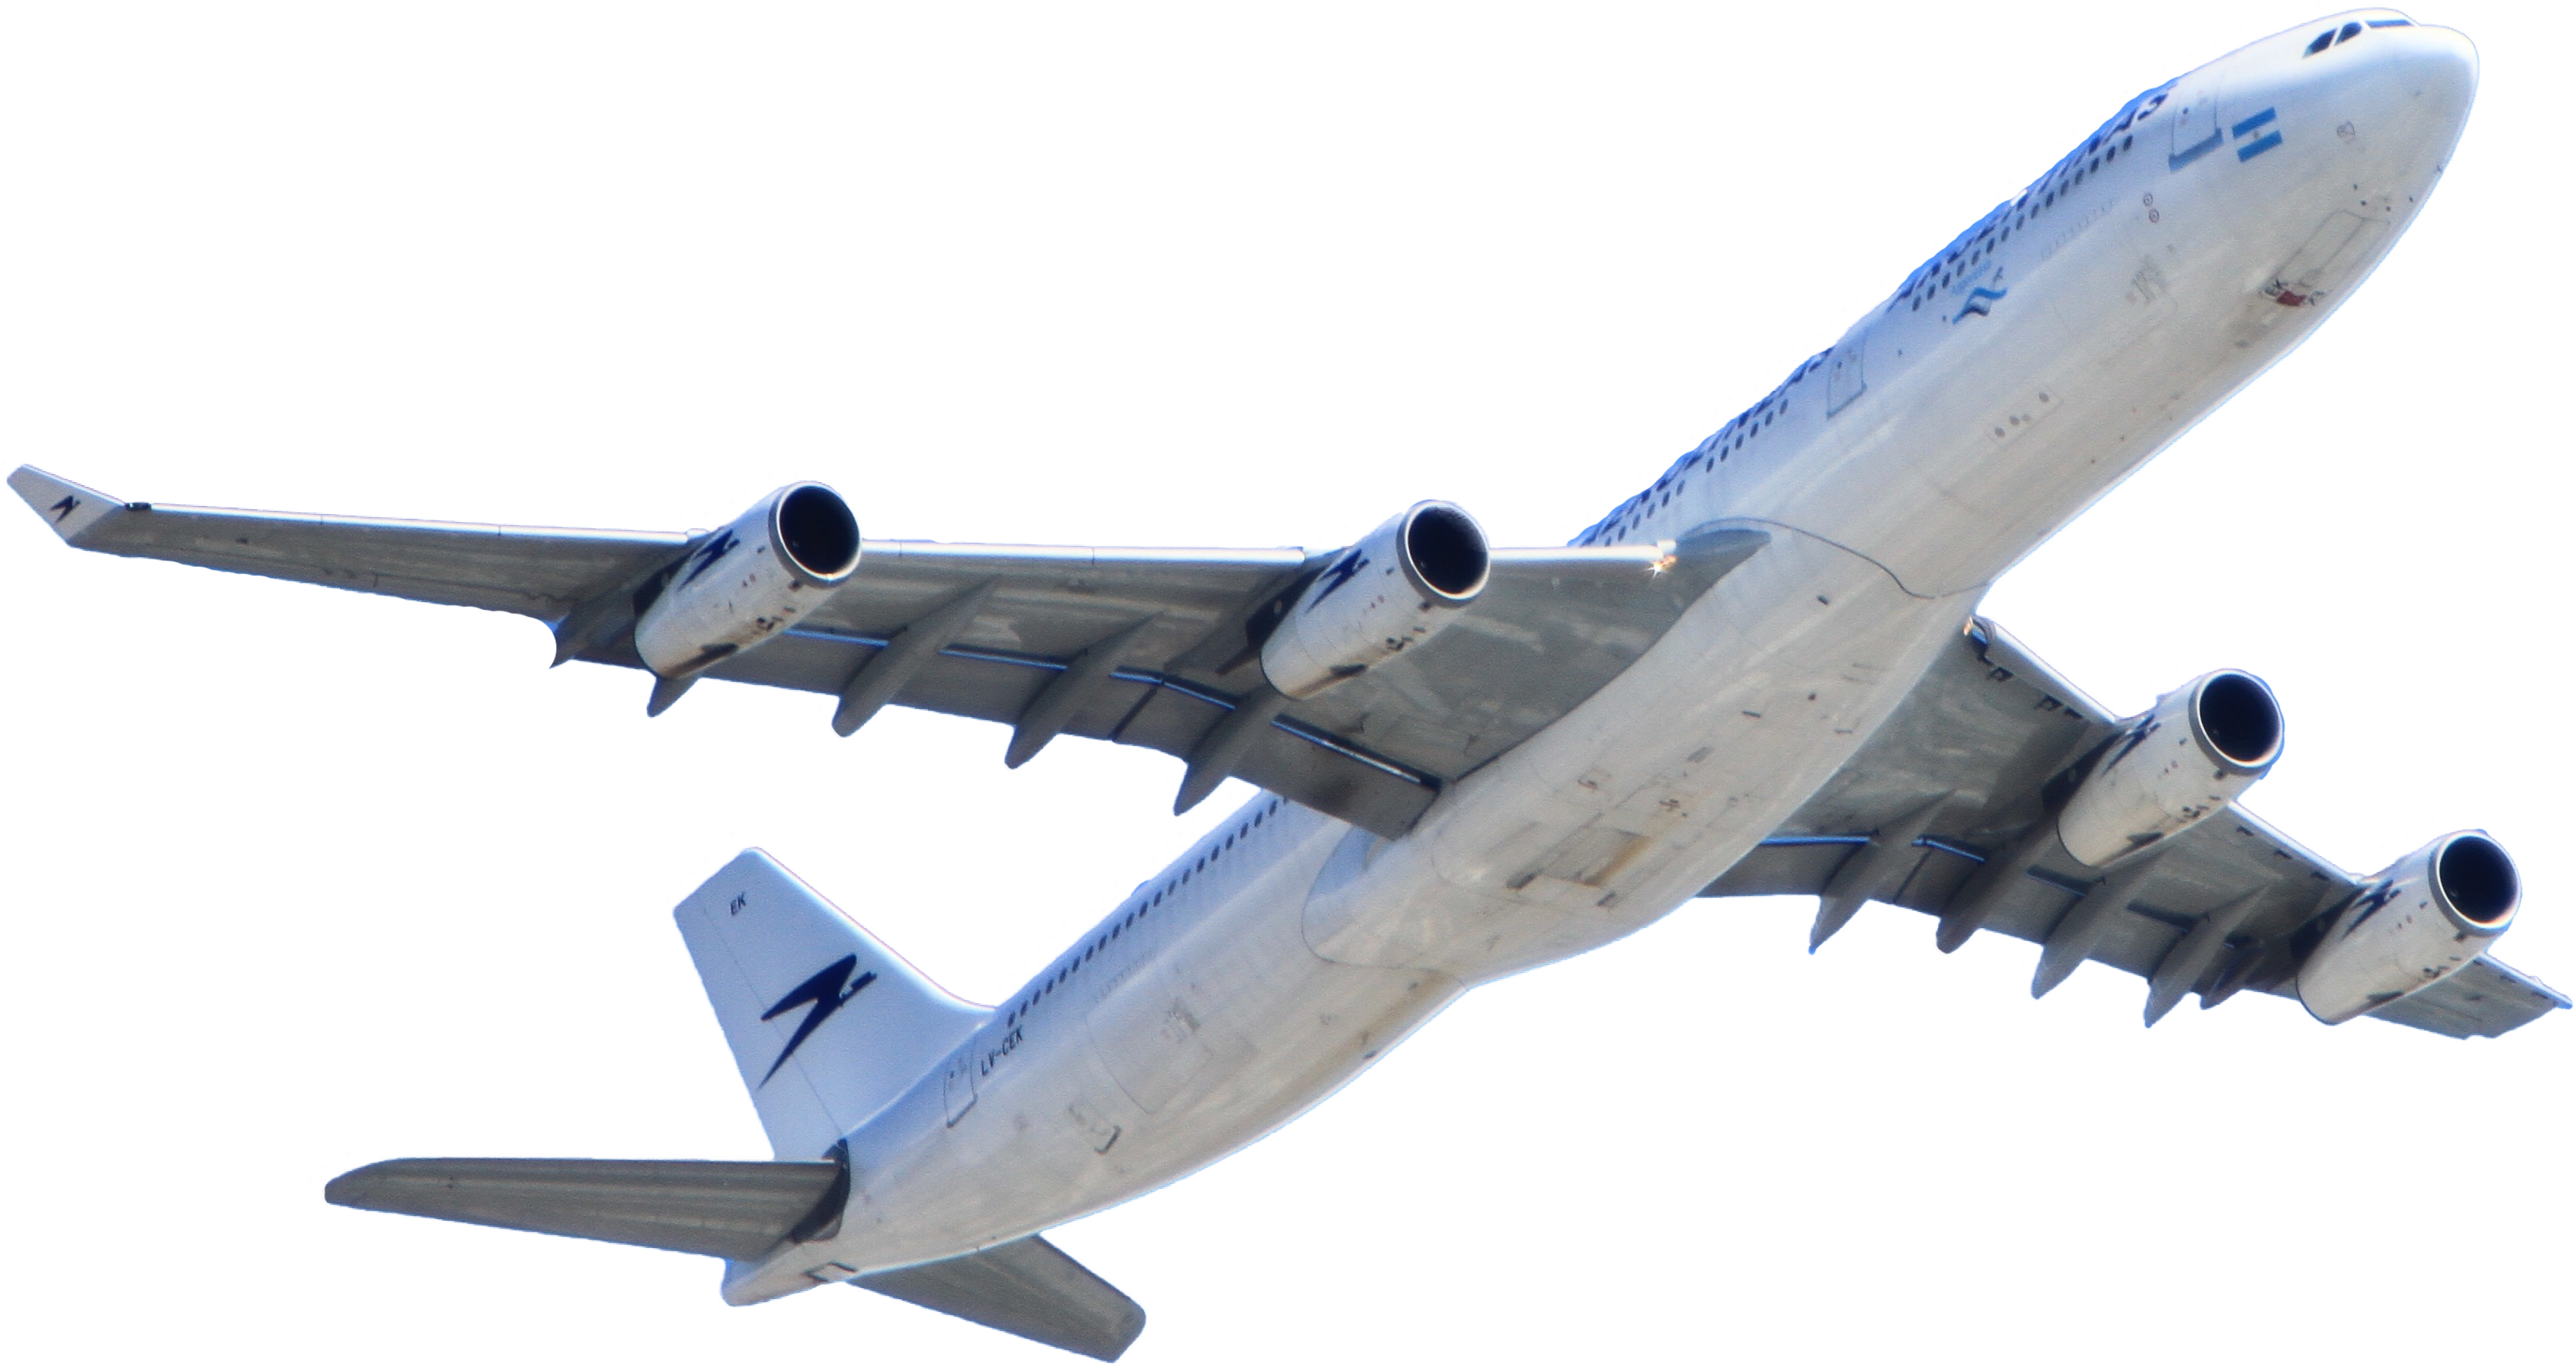 airplane transparent background